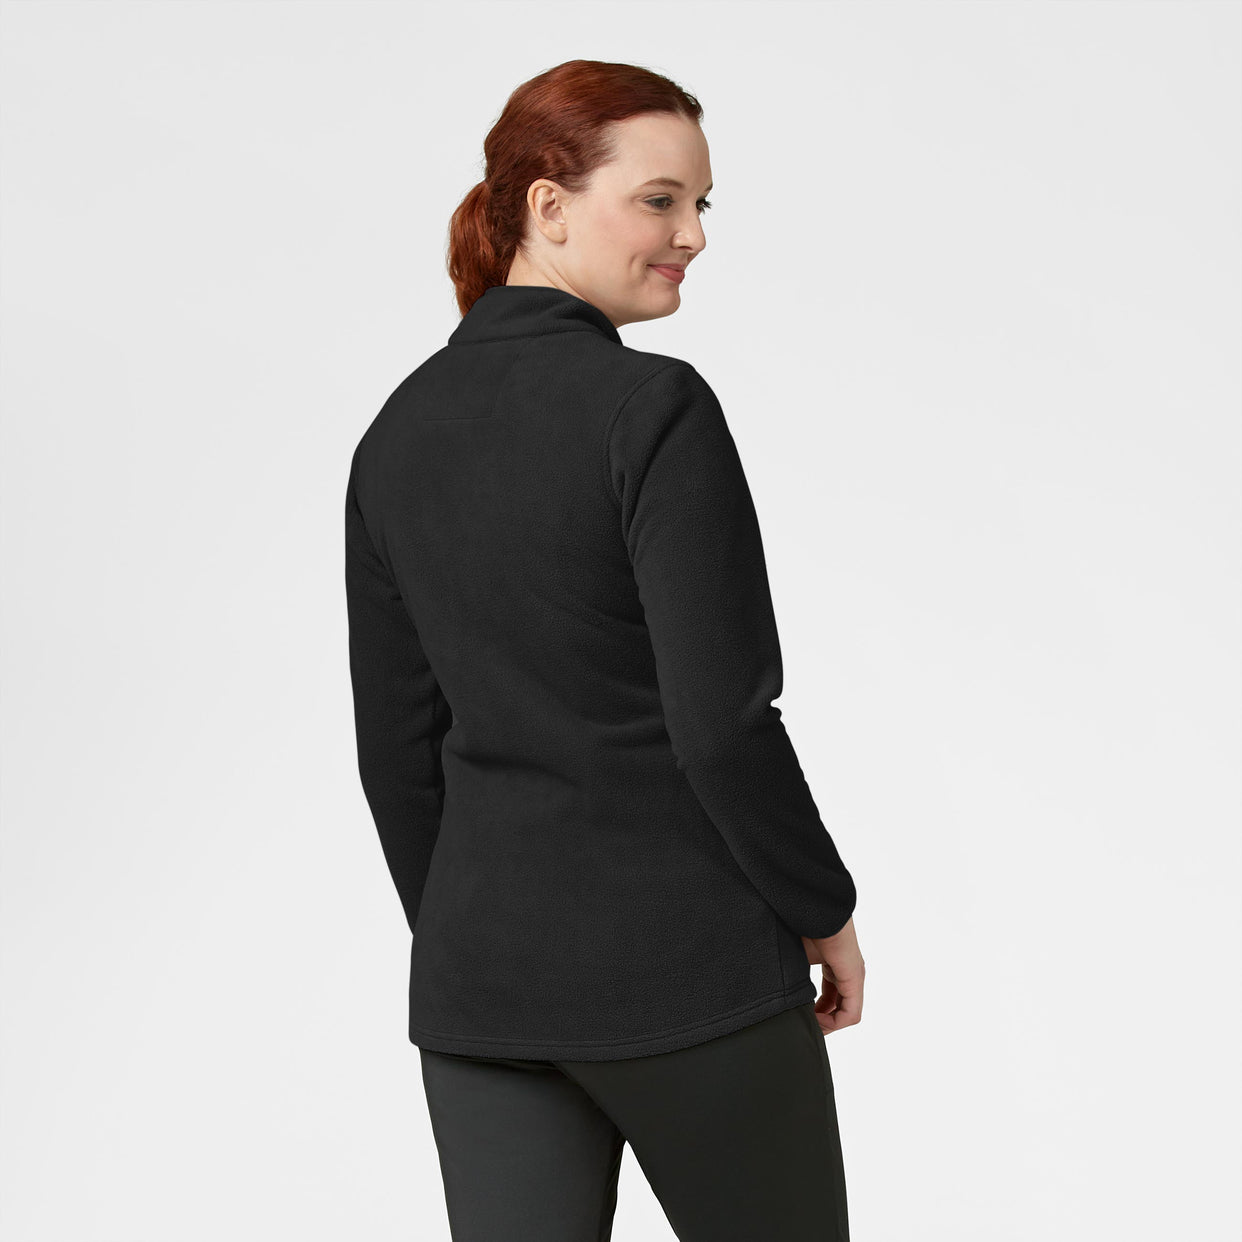 3271 Women's Brushed Back Micro-Fleece Full-Zip Jacket custom